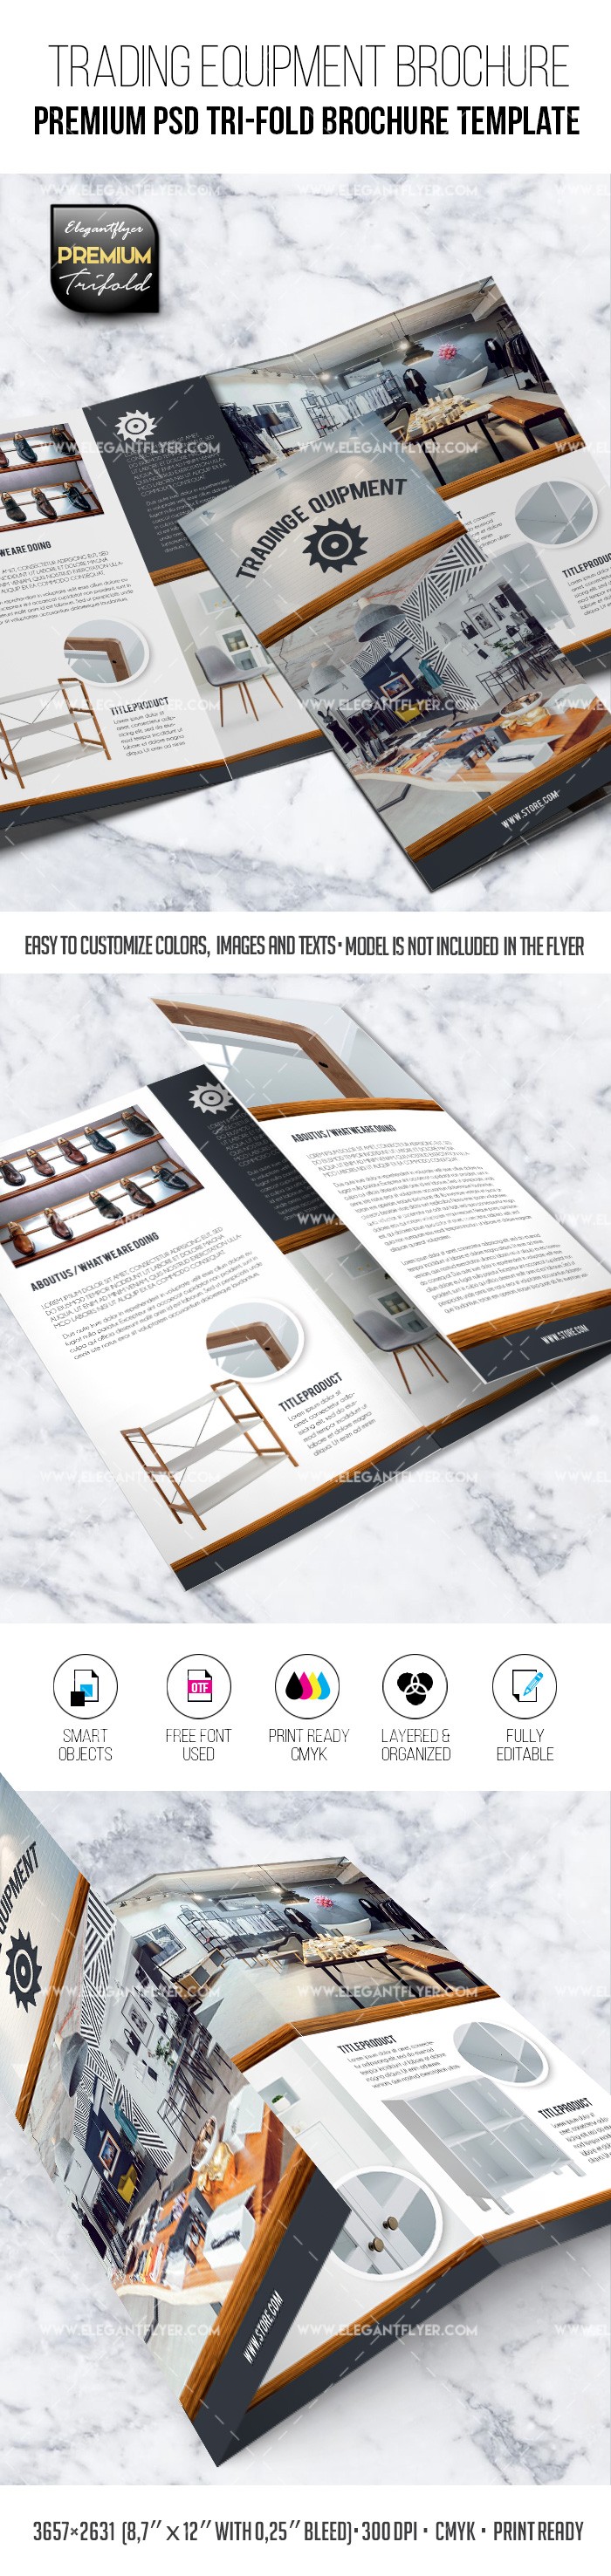 Brochure d'équipement de trading. by ElegantFlyer